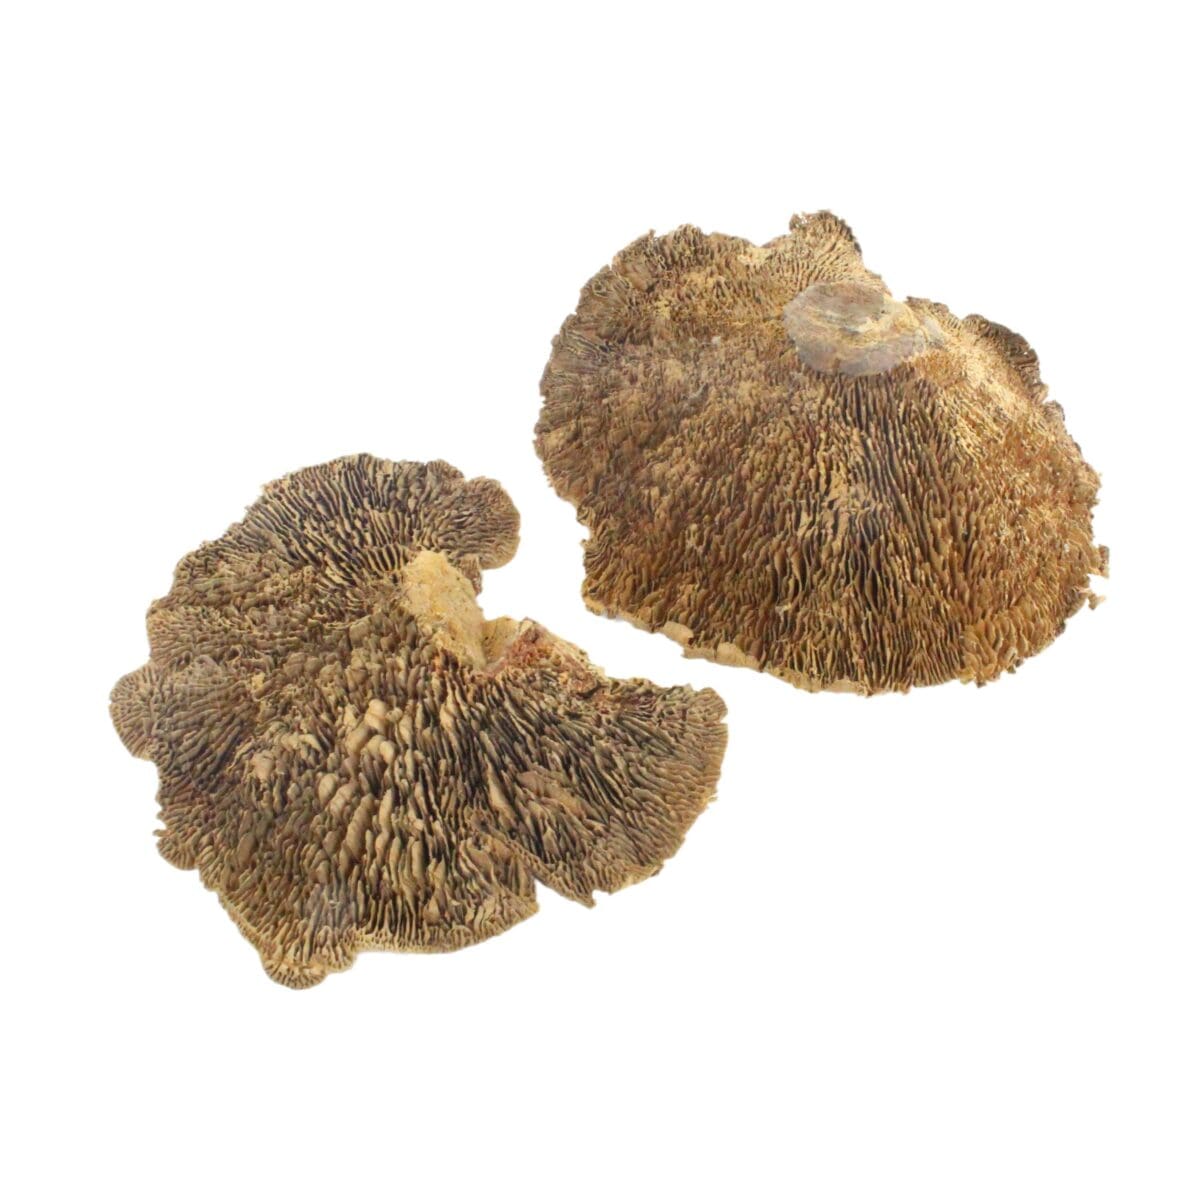 natural dried sponge mushroom